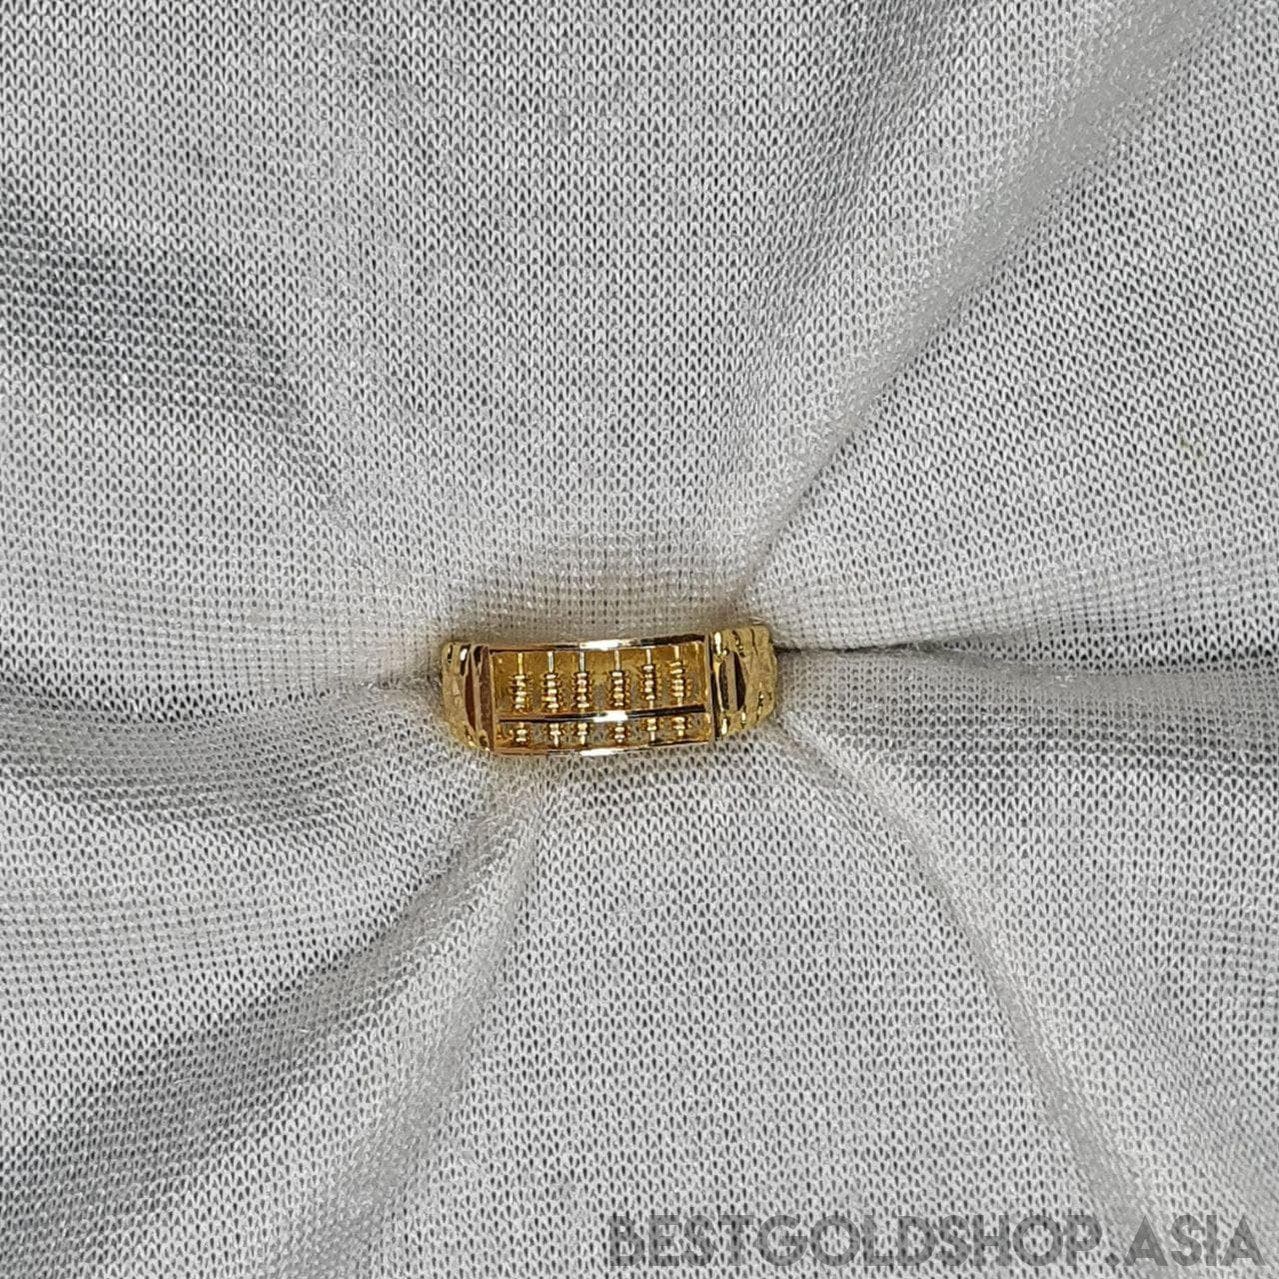 916 / 22K Gold Half Abacus ring-916 gold-Best Gold Shop